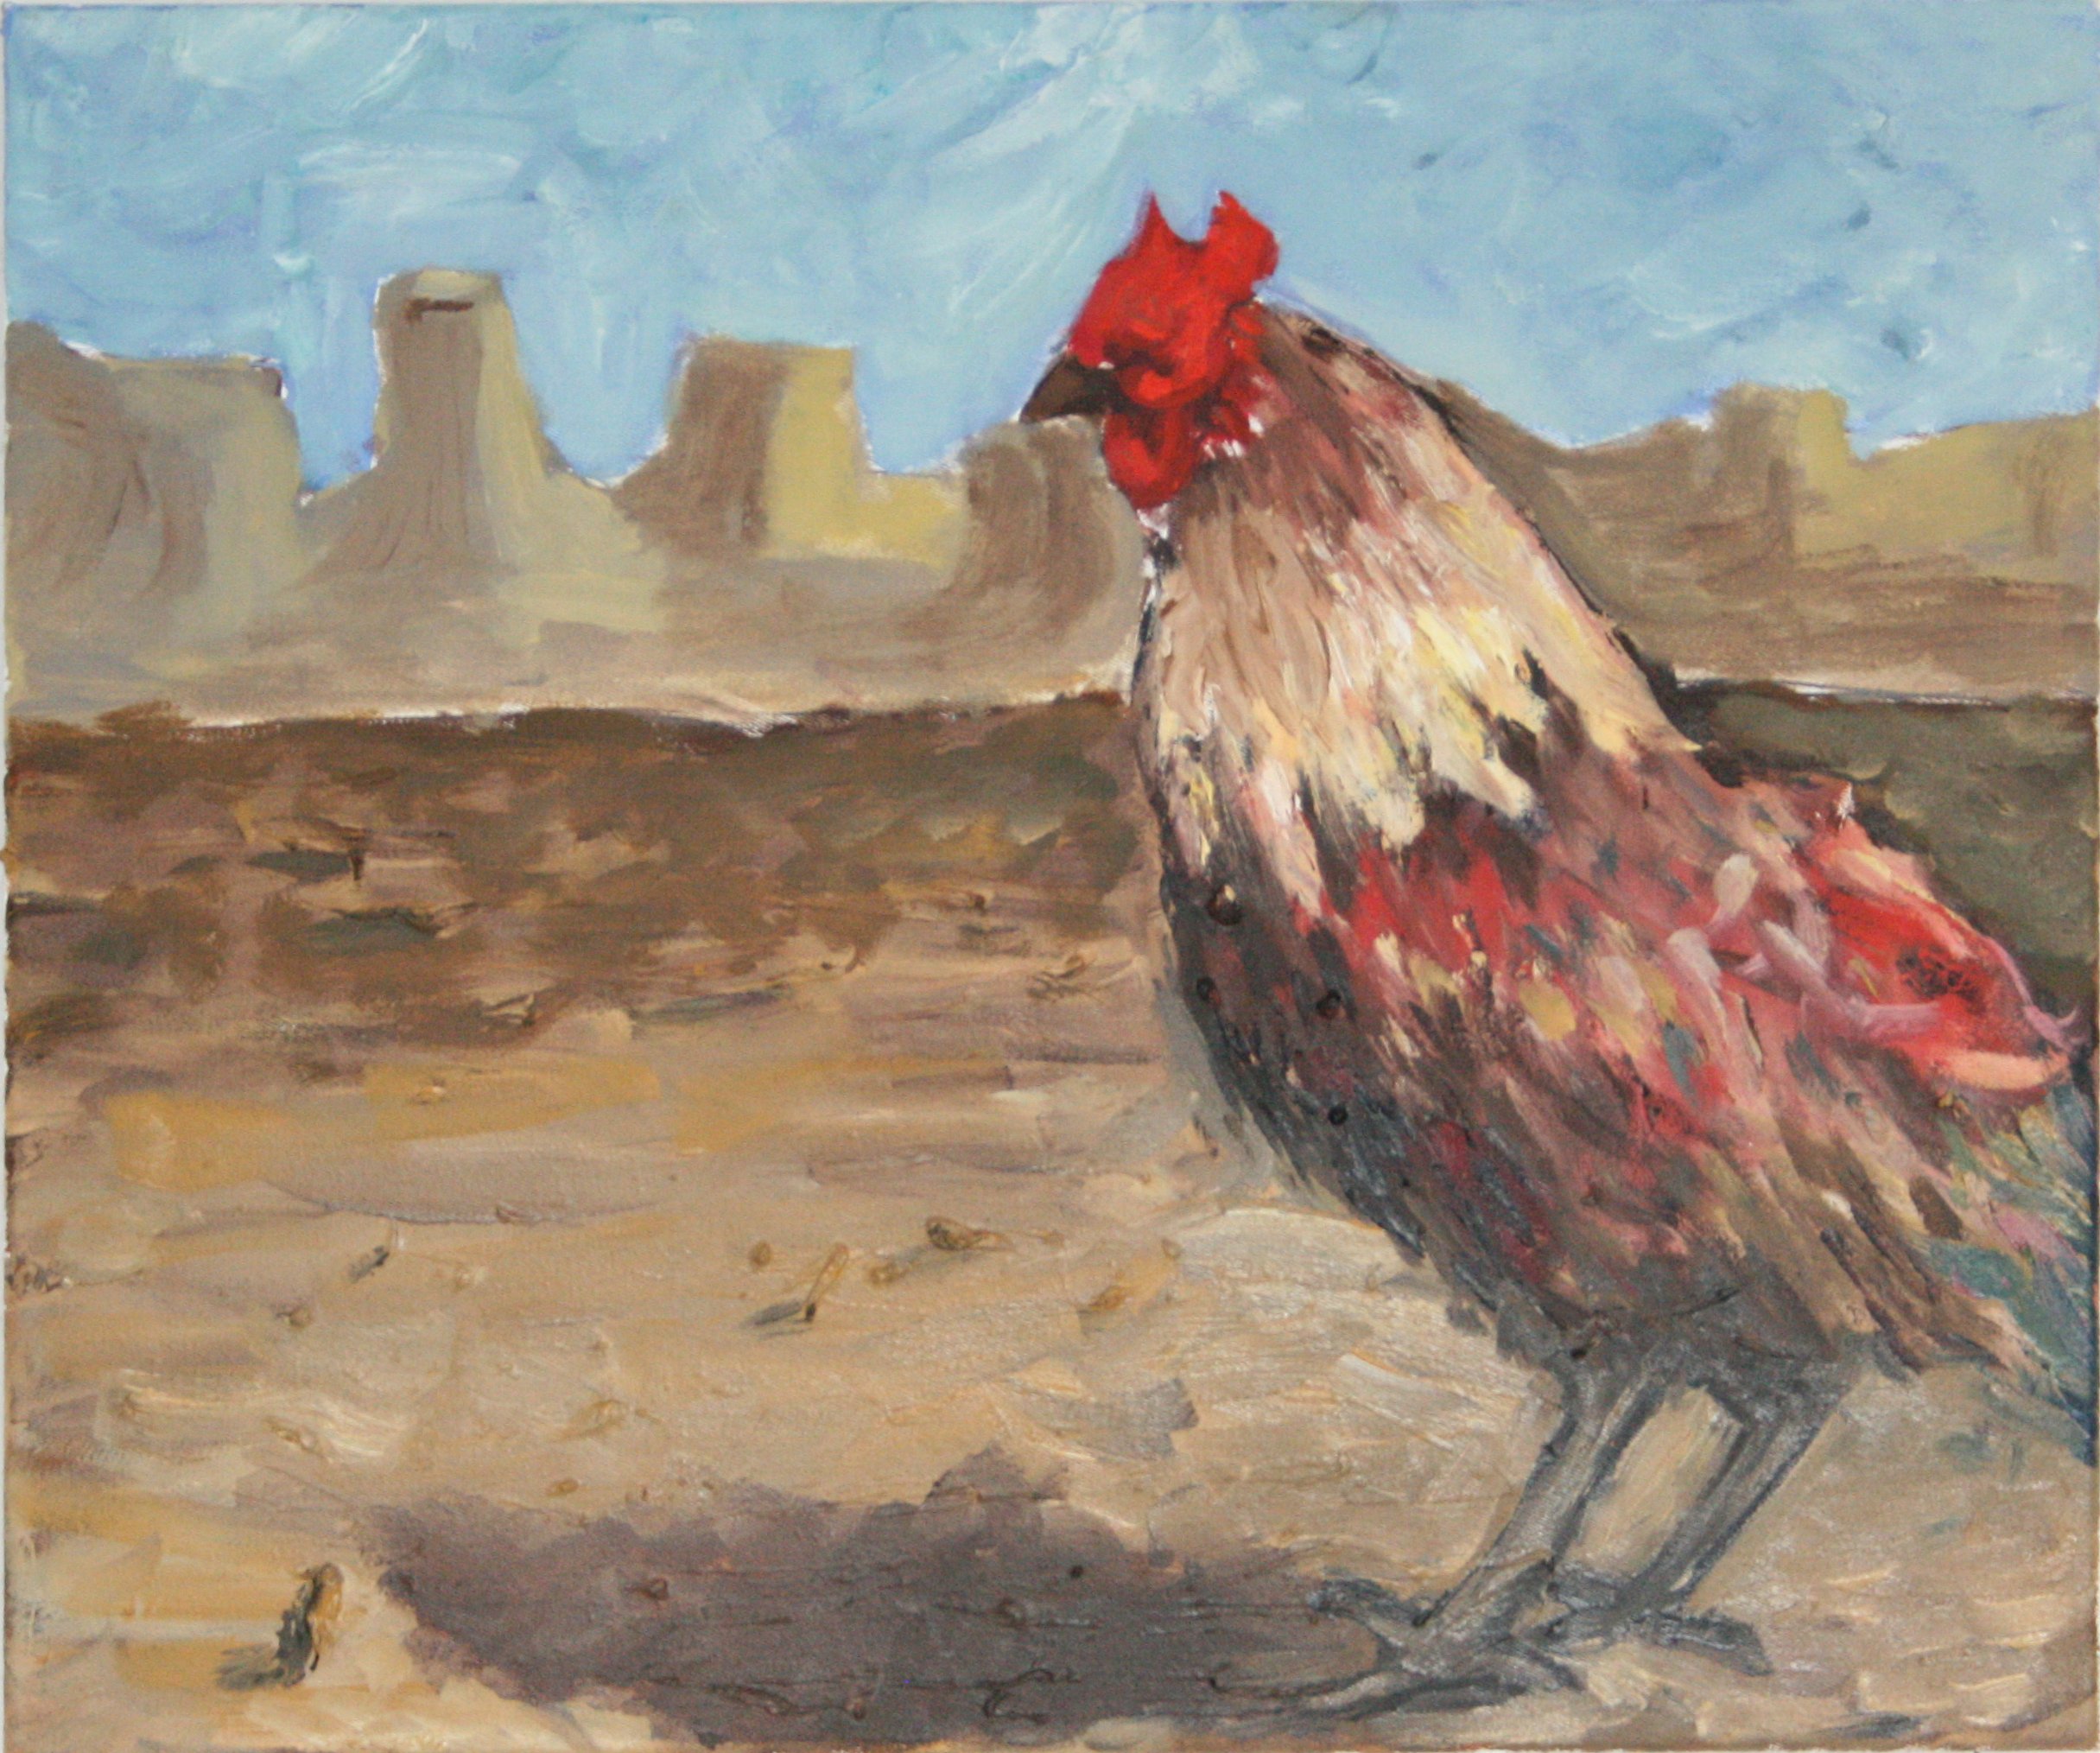 Isolation oil on canvas, 60 X 50 cm. 2008 by Raafed-Jarah